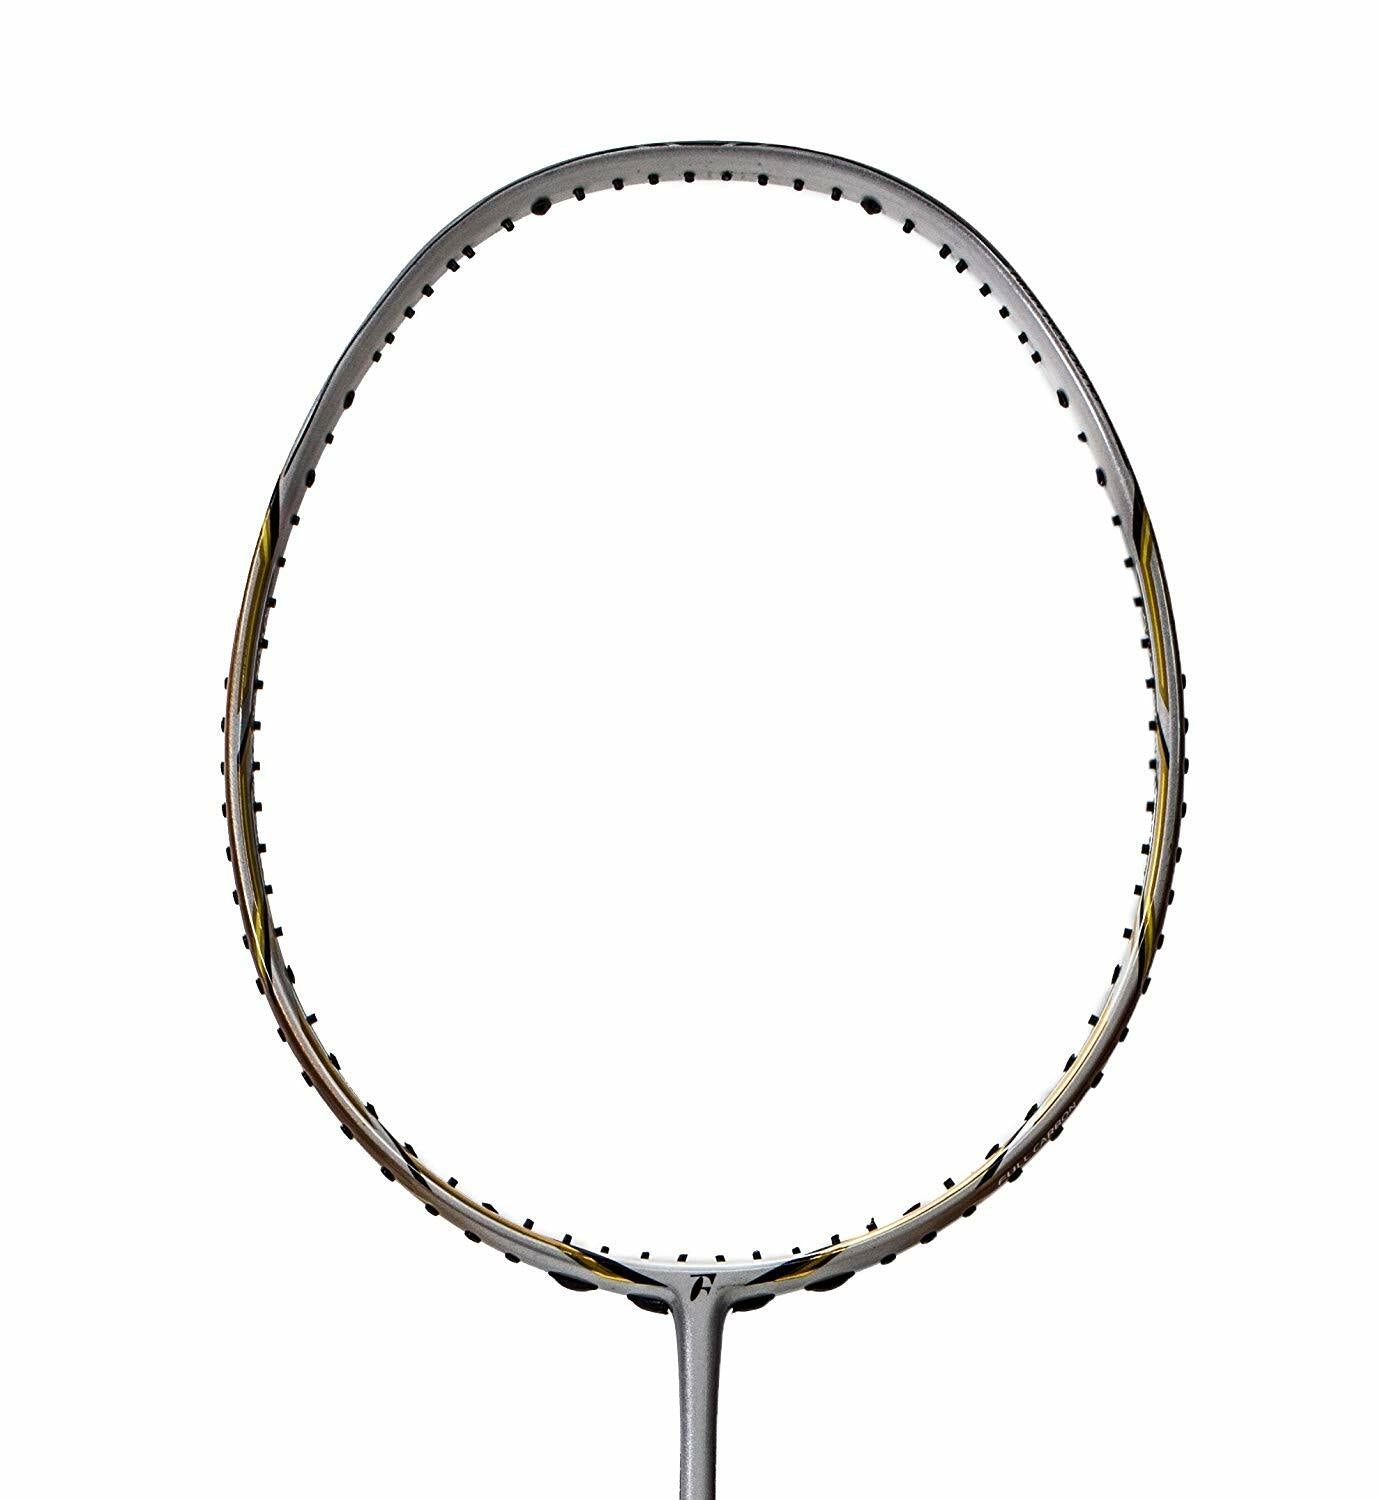 Fleet Nanomah 700FX Badminton Racket